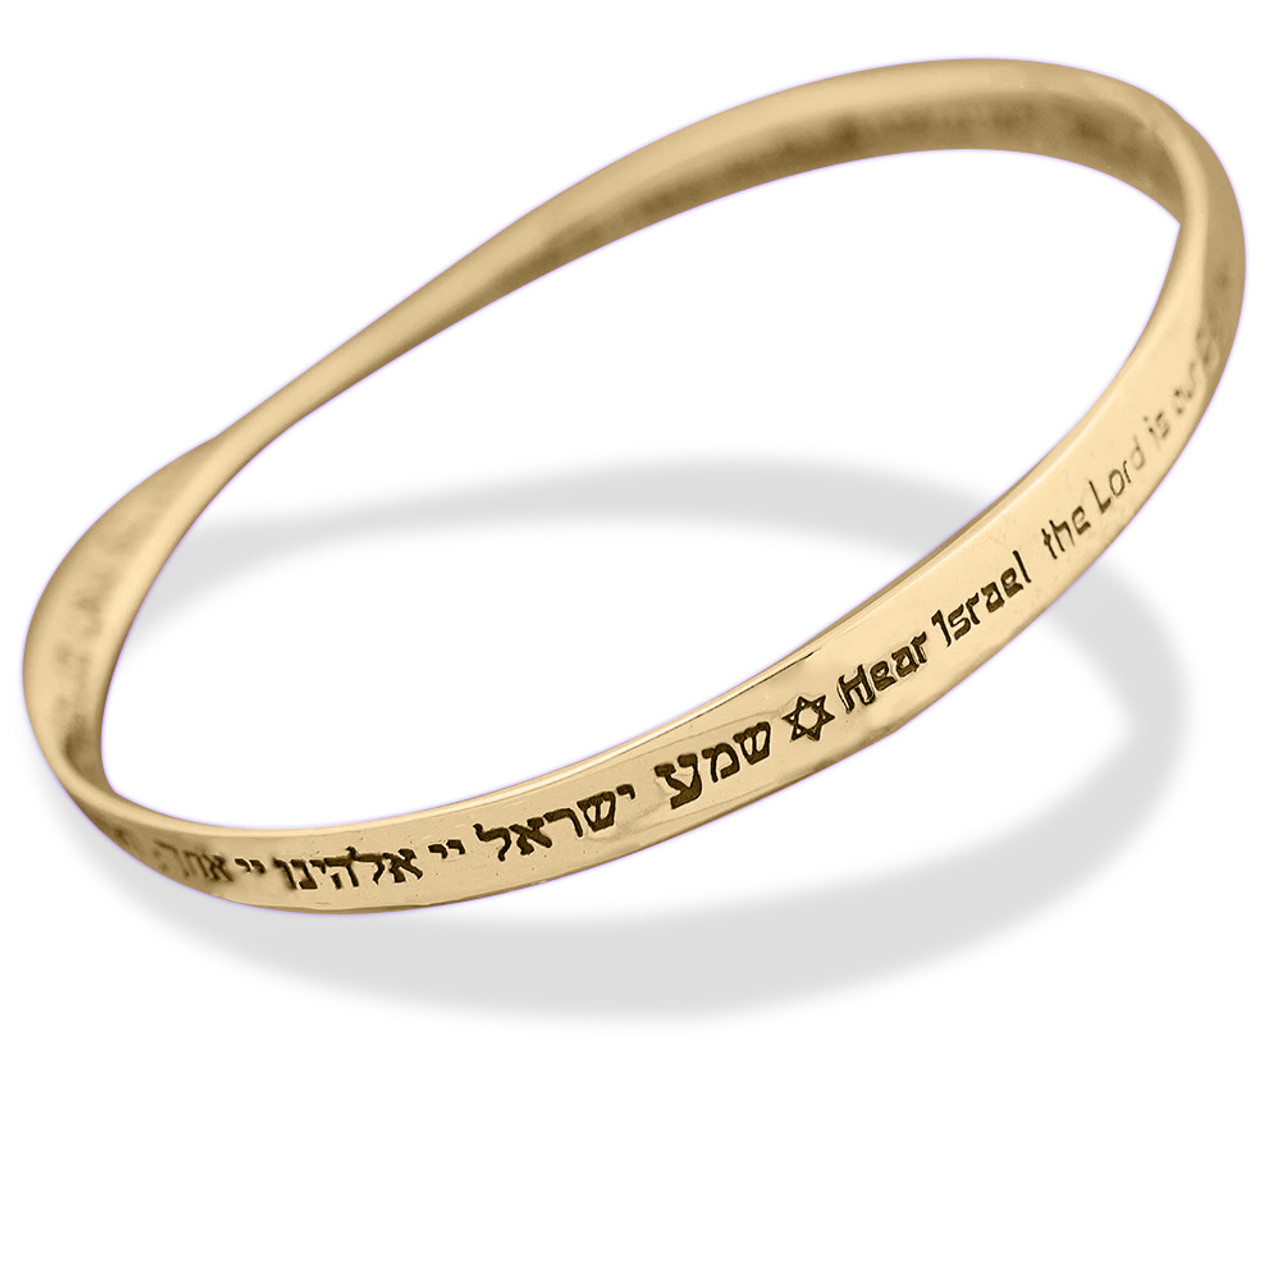 The Lord's Prayer Mobius Bangle Bracelet